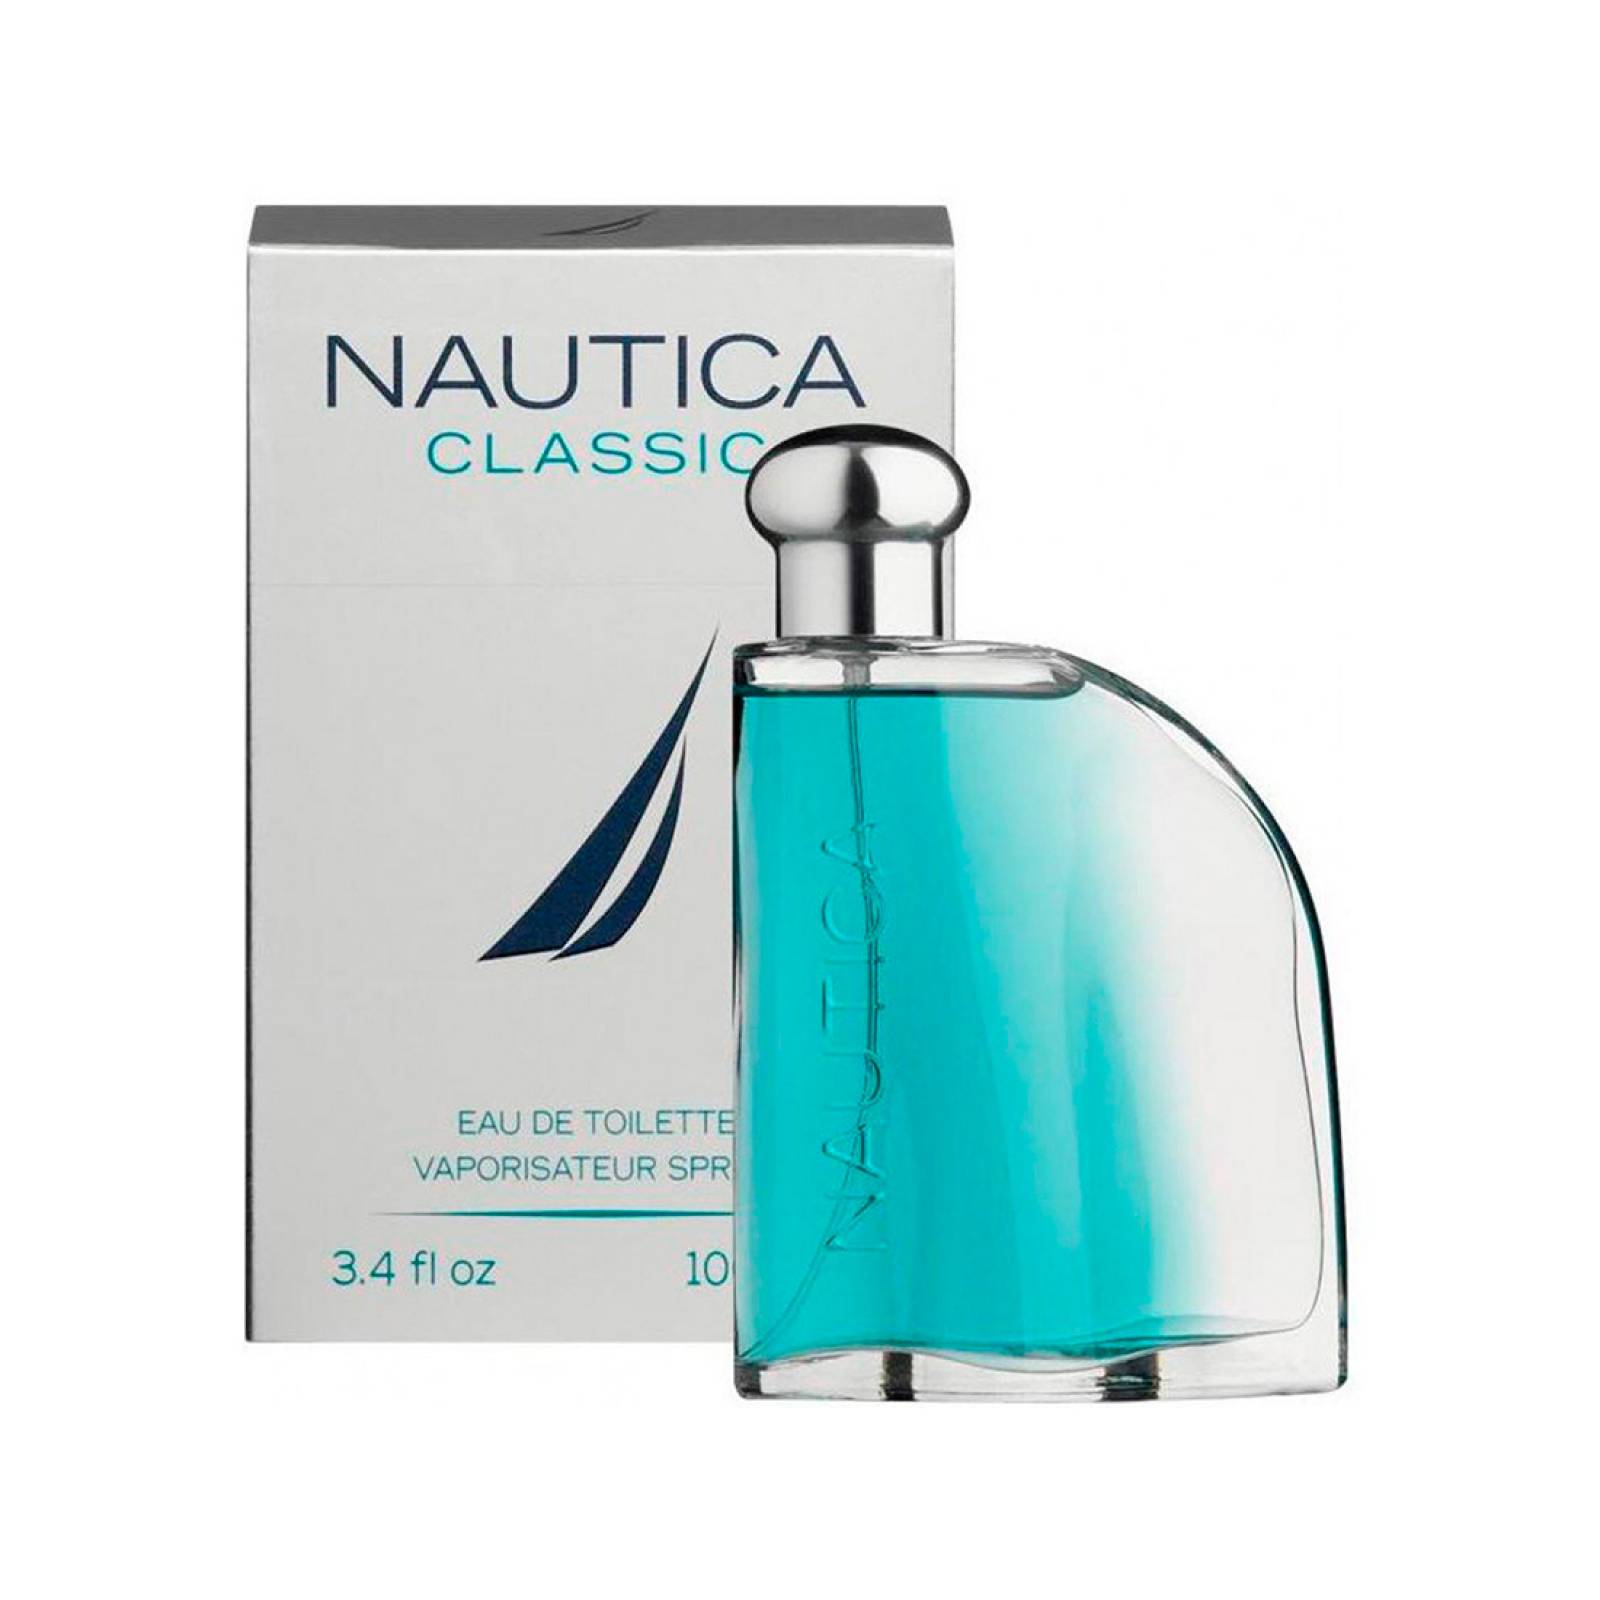 NAUTICA CLASSIC - NAUTICA - EDT SPRAY 100ML